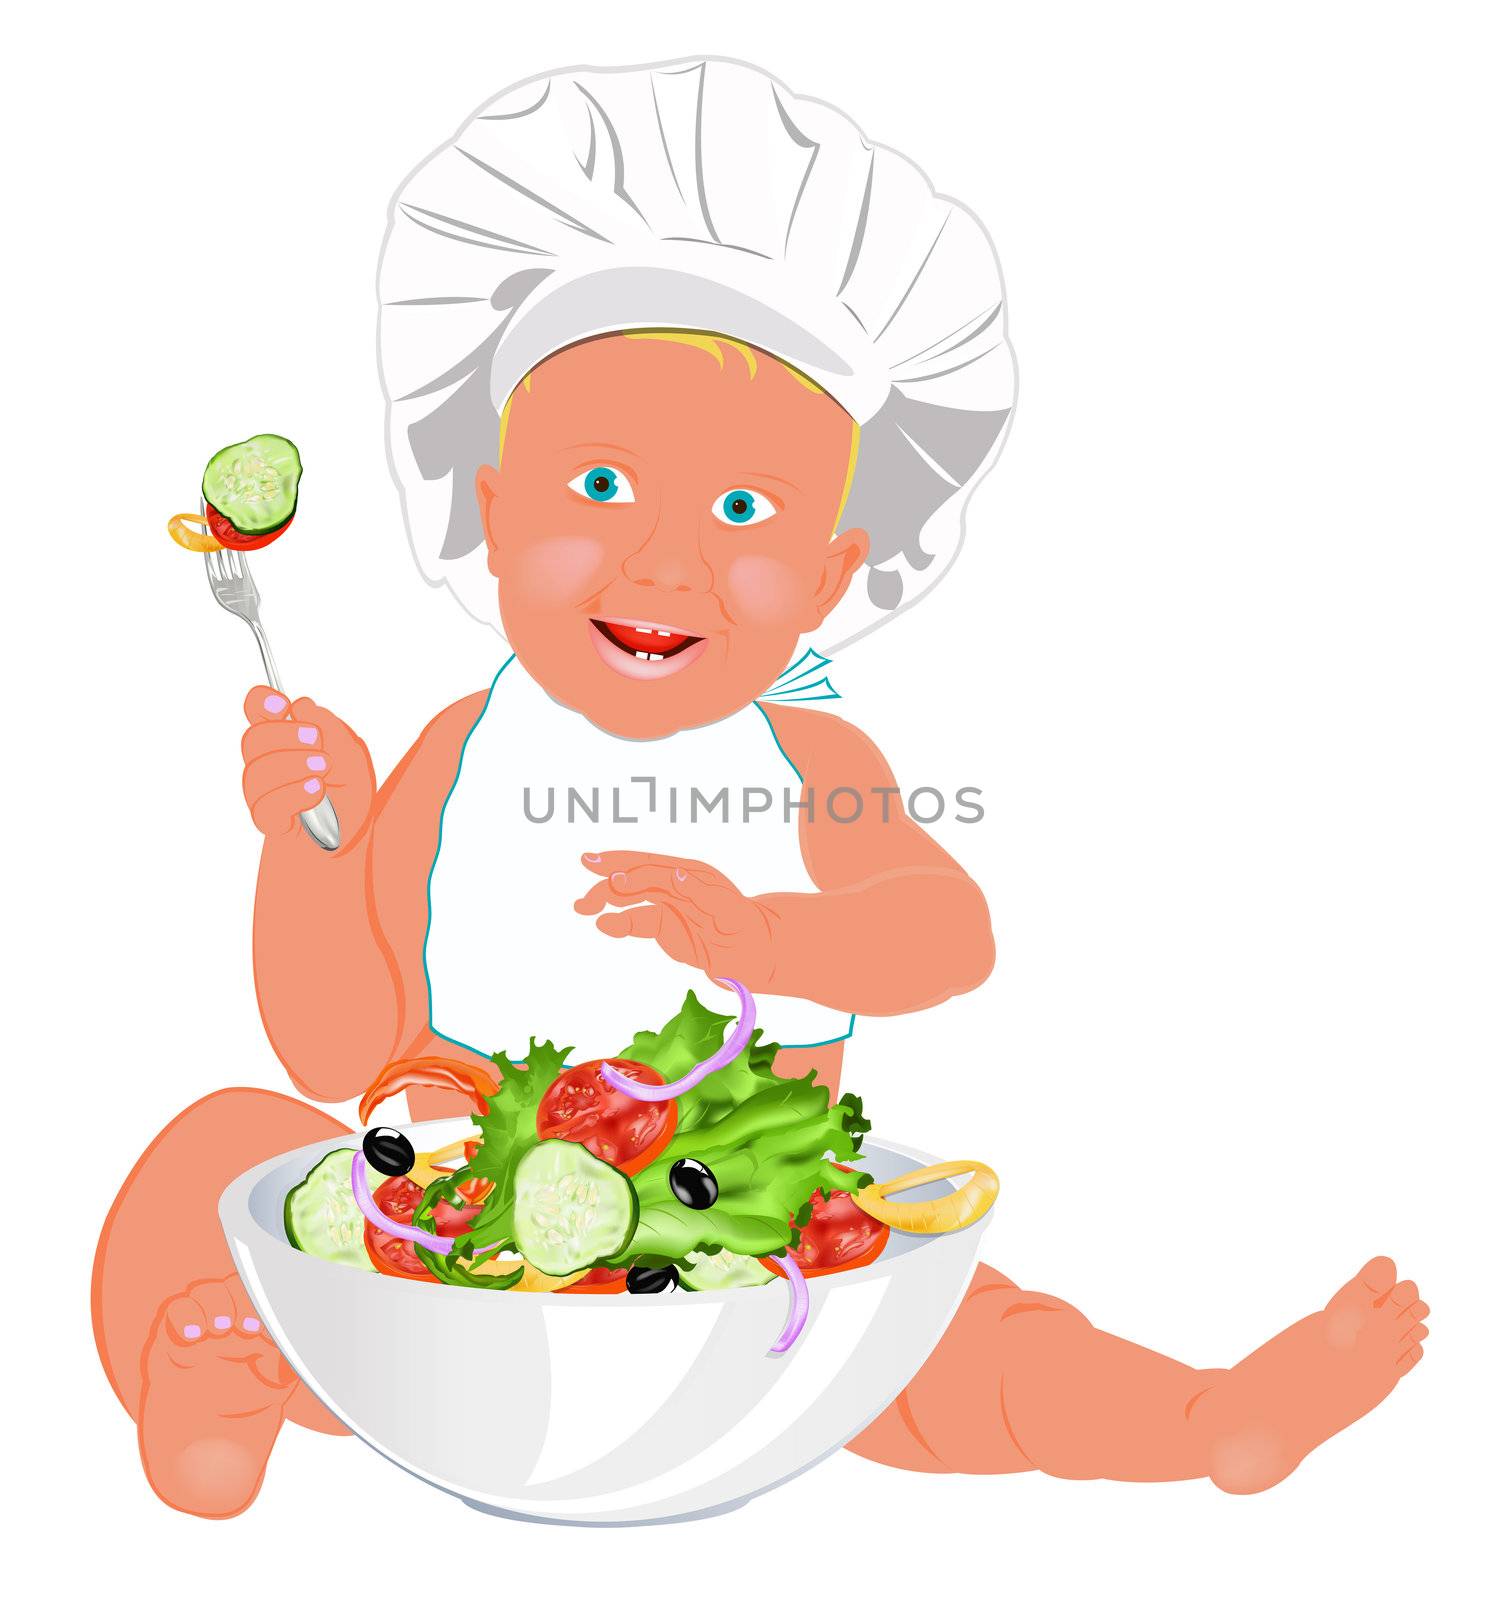 Chef Child and fresh vegetable salad